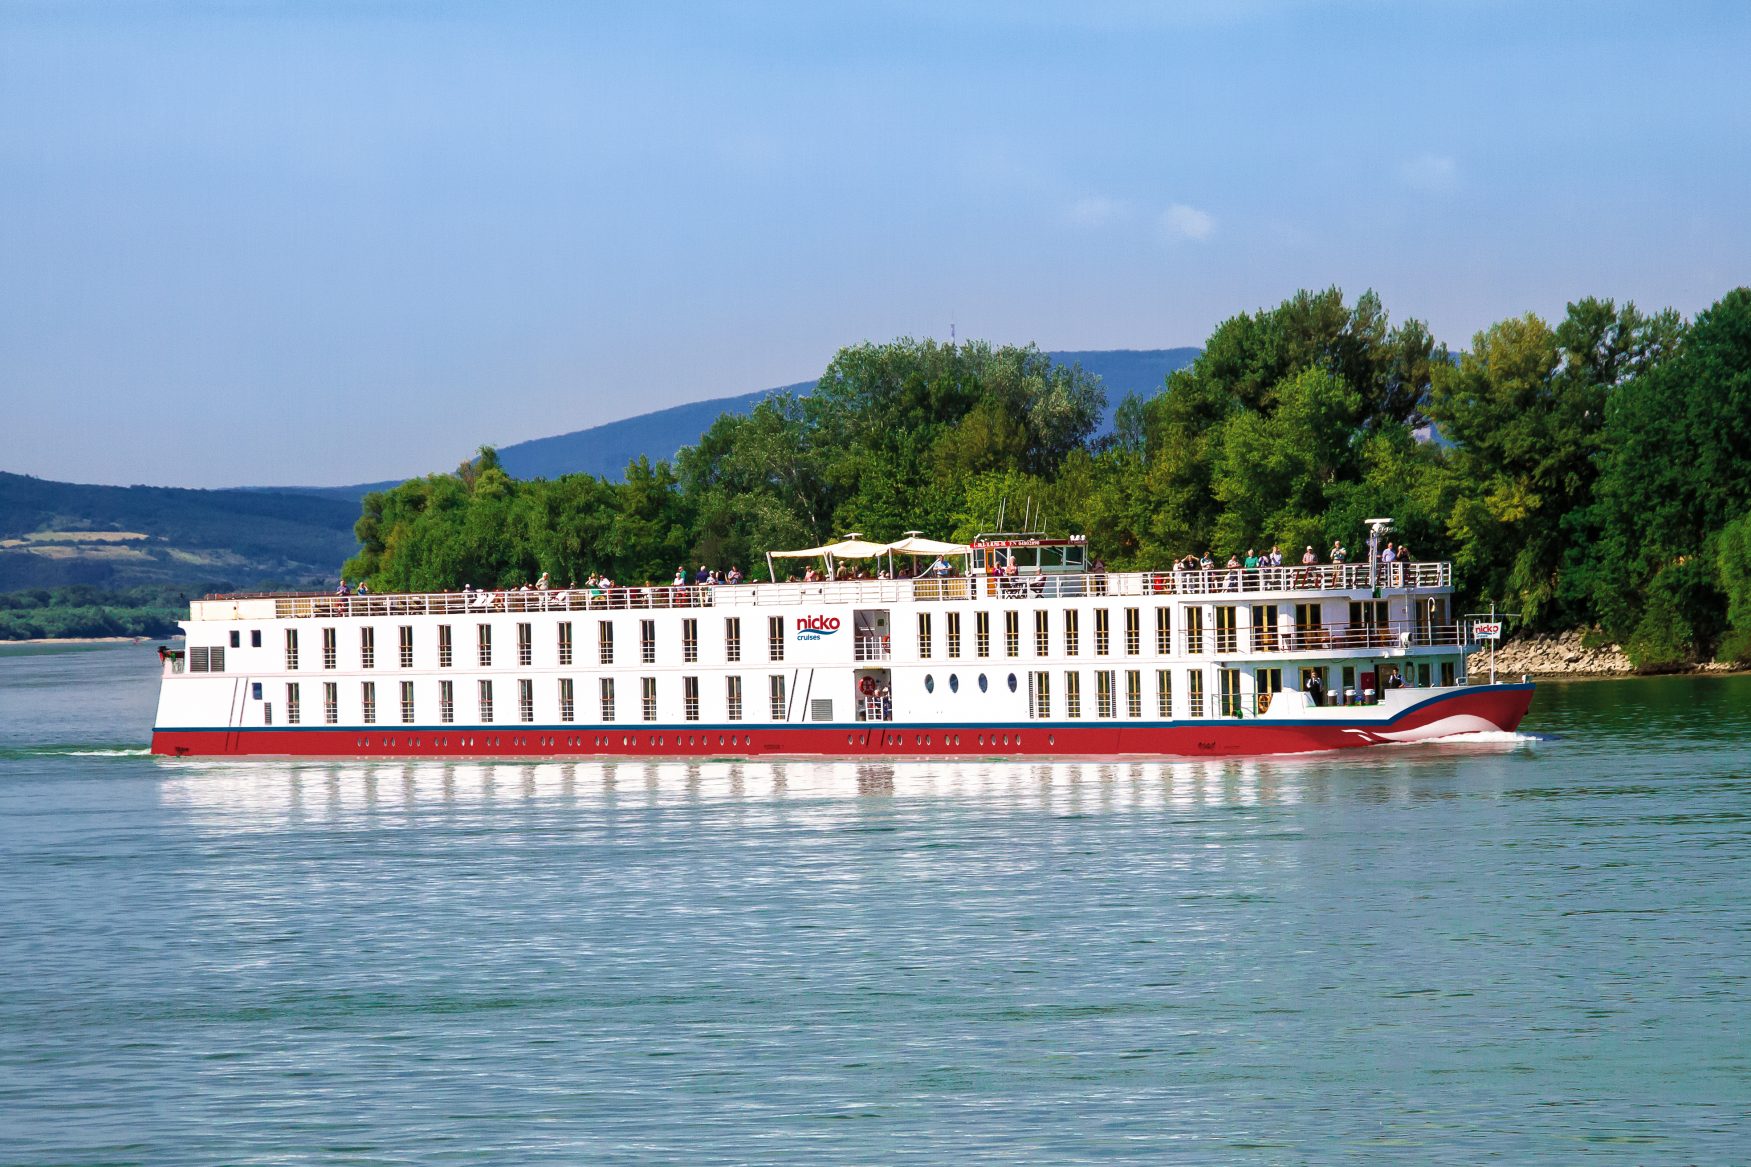 MS HEIDELBERG 2018 auf dem Rhein Foto: nicko cruises